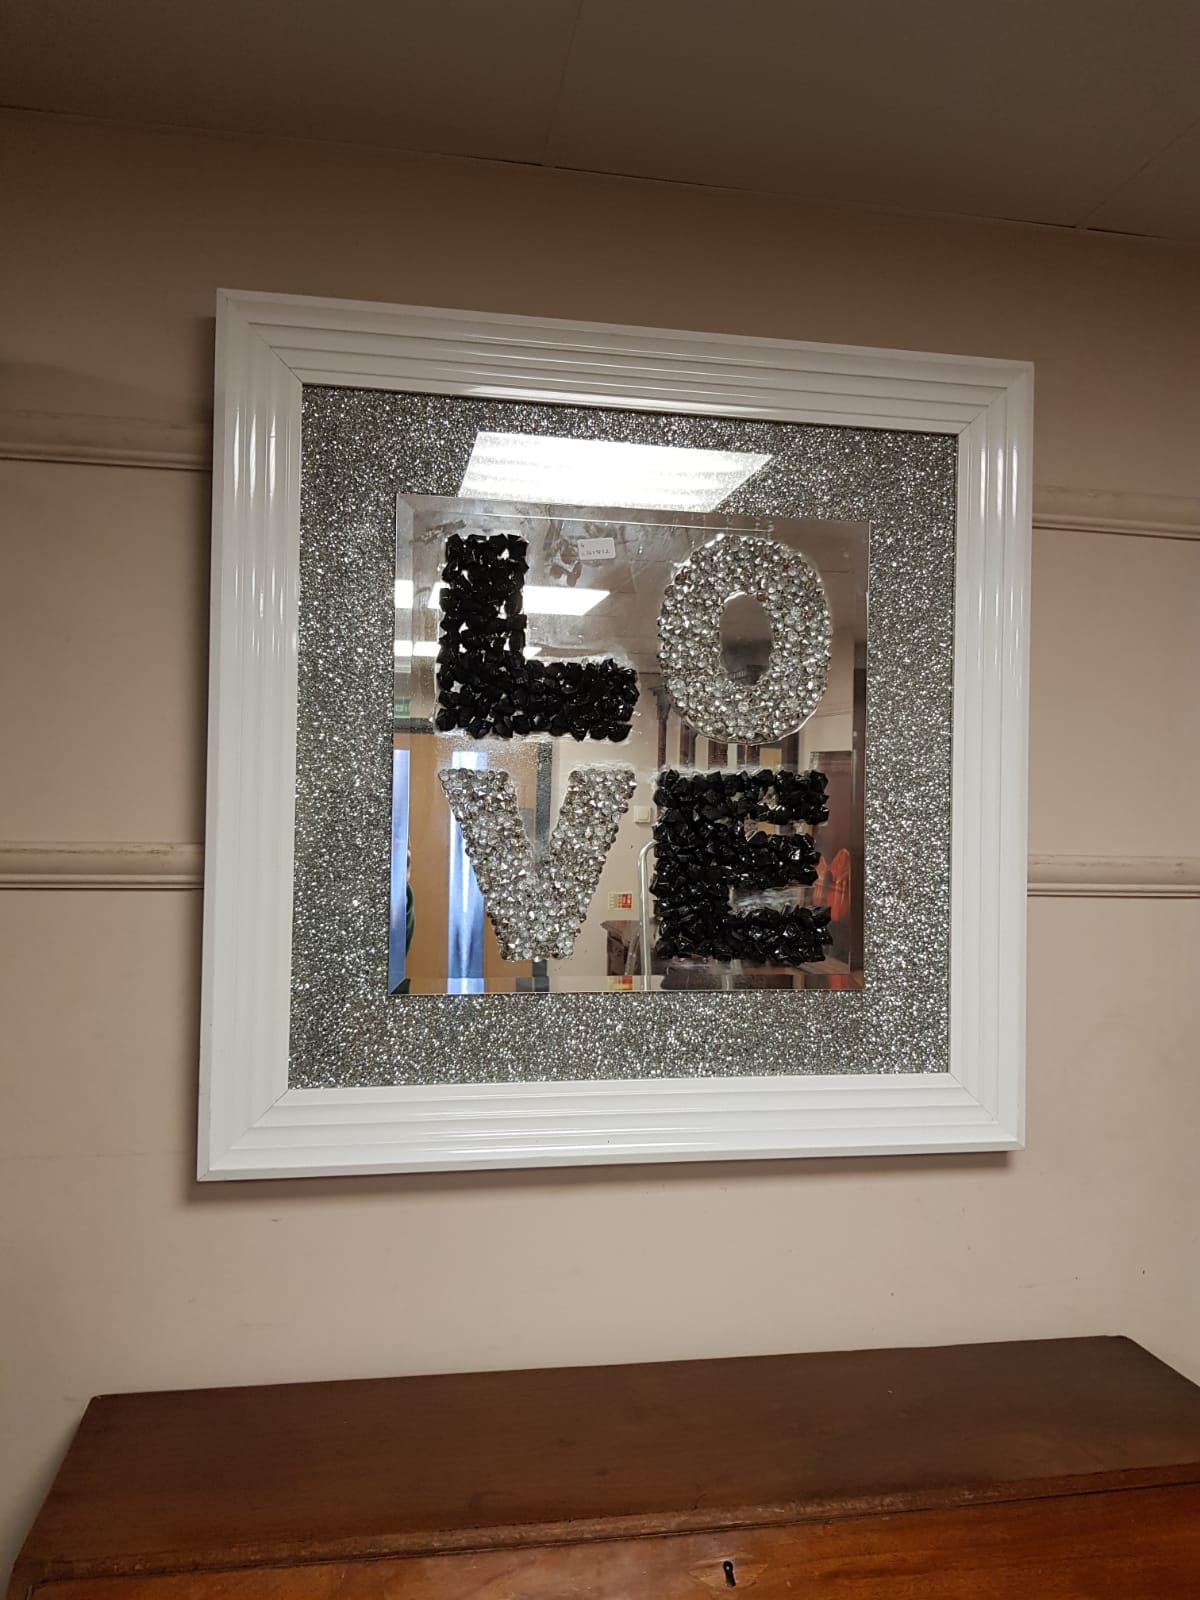 A contemporary framed 'Love' mirror